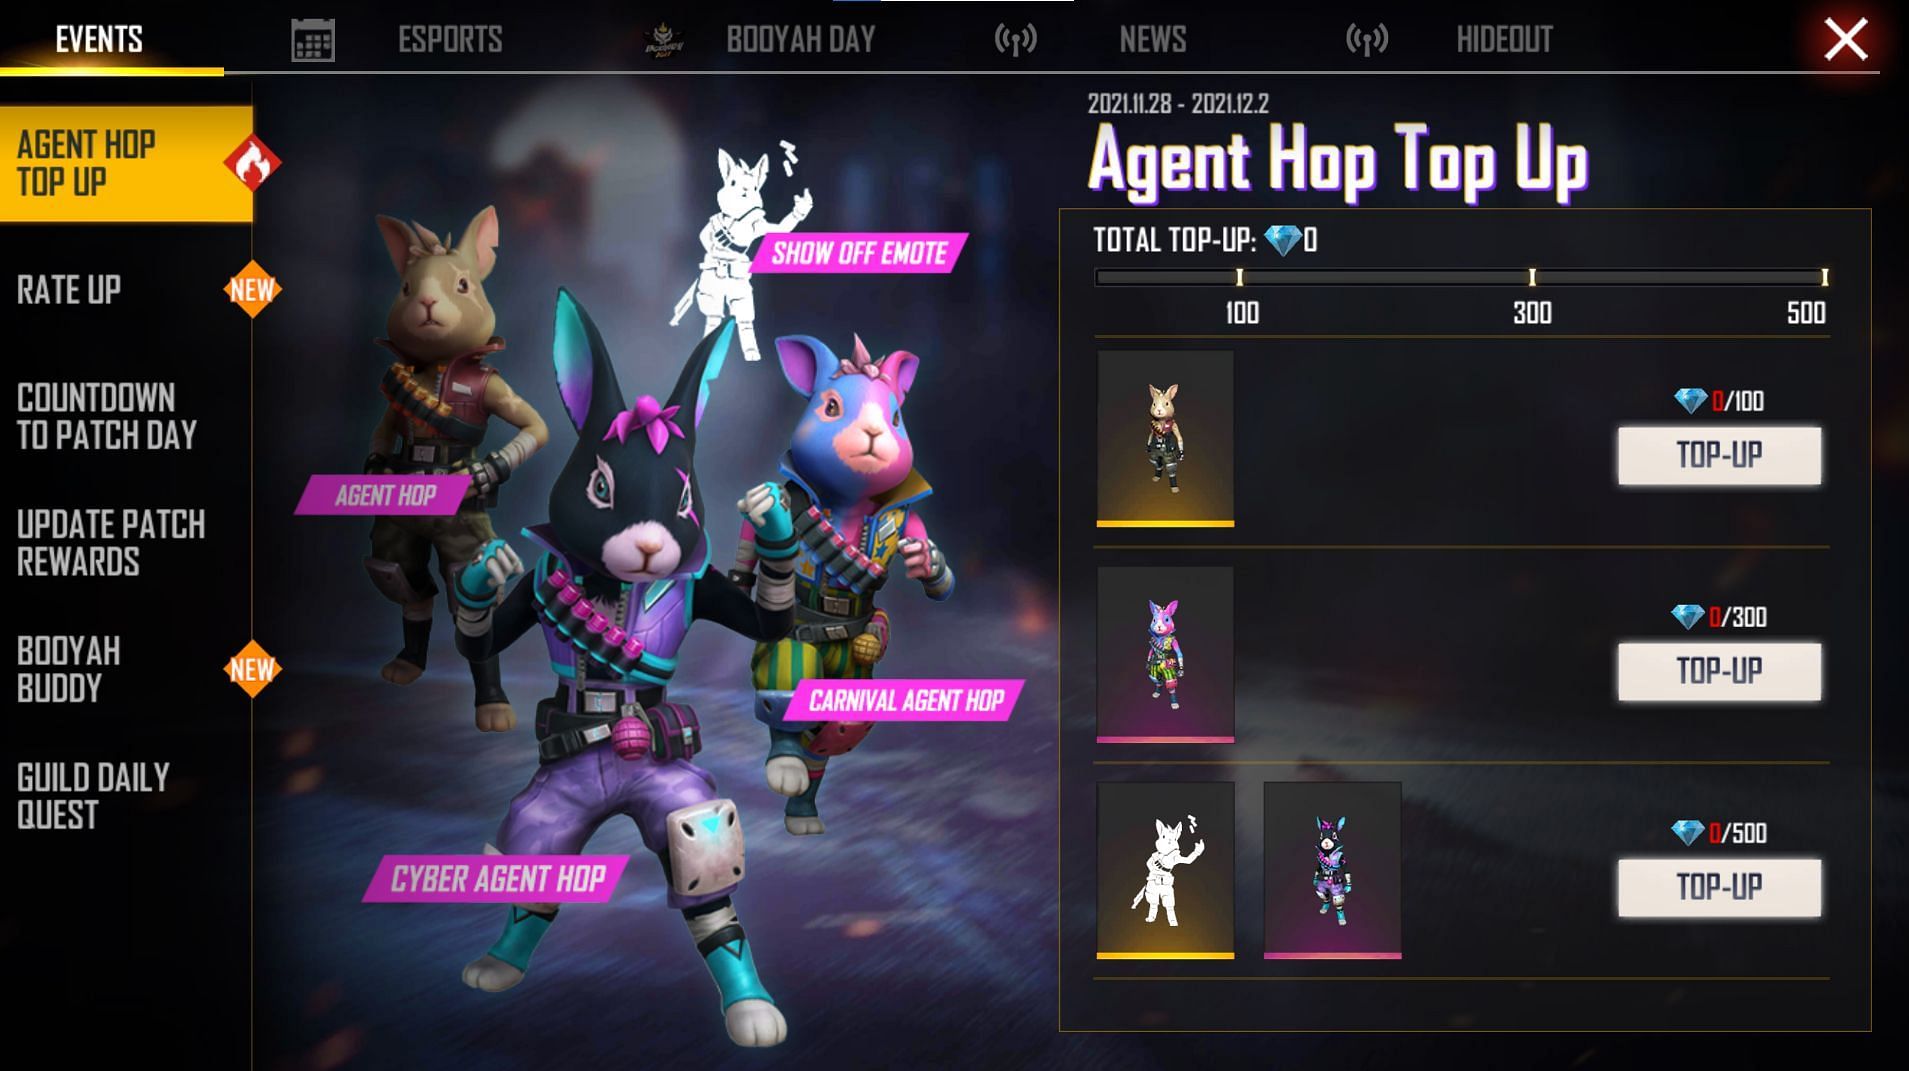 Agent Hop Top Up (Image via Free Fire)